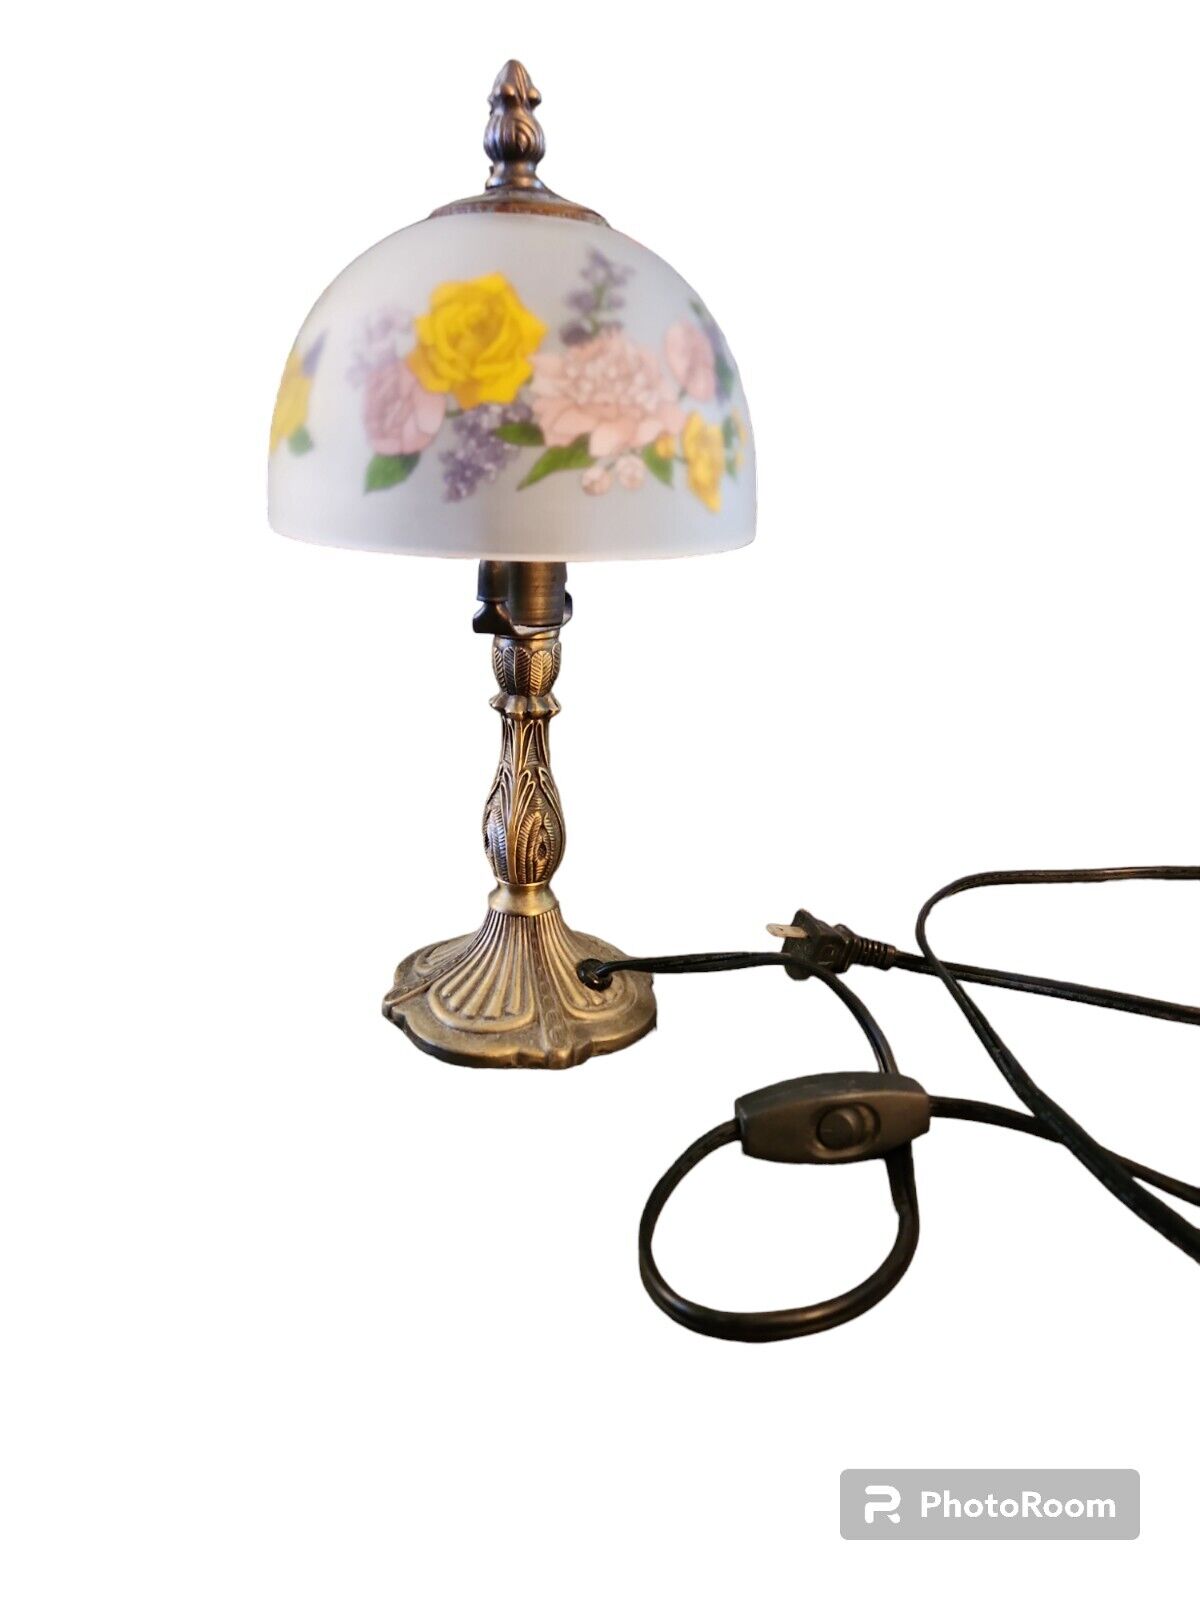  Shanghai Union Arts & Craft Co ROMANTIC FLOWERS Lamp